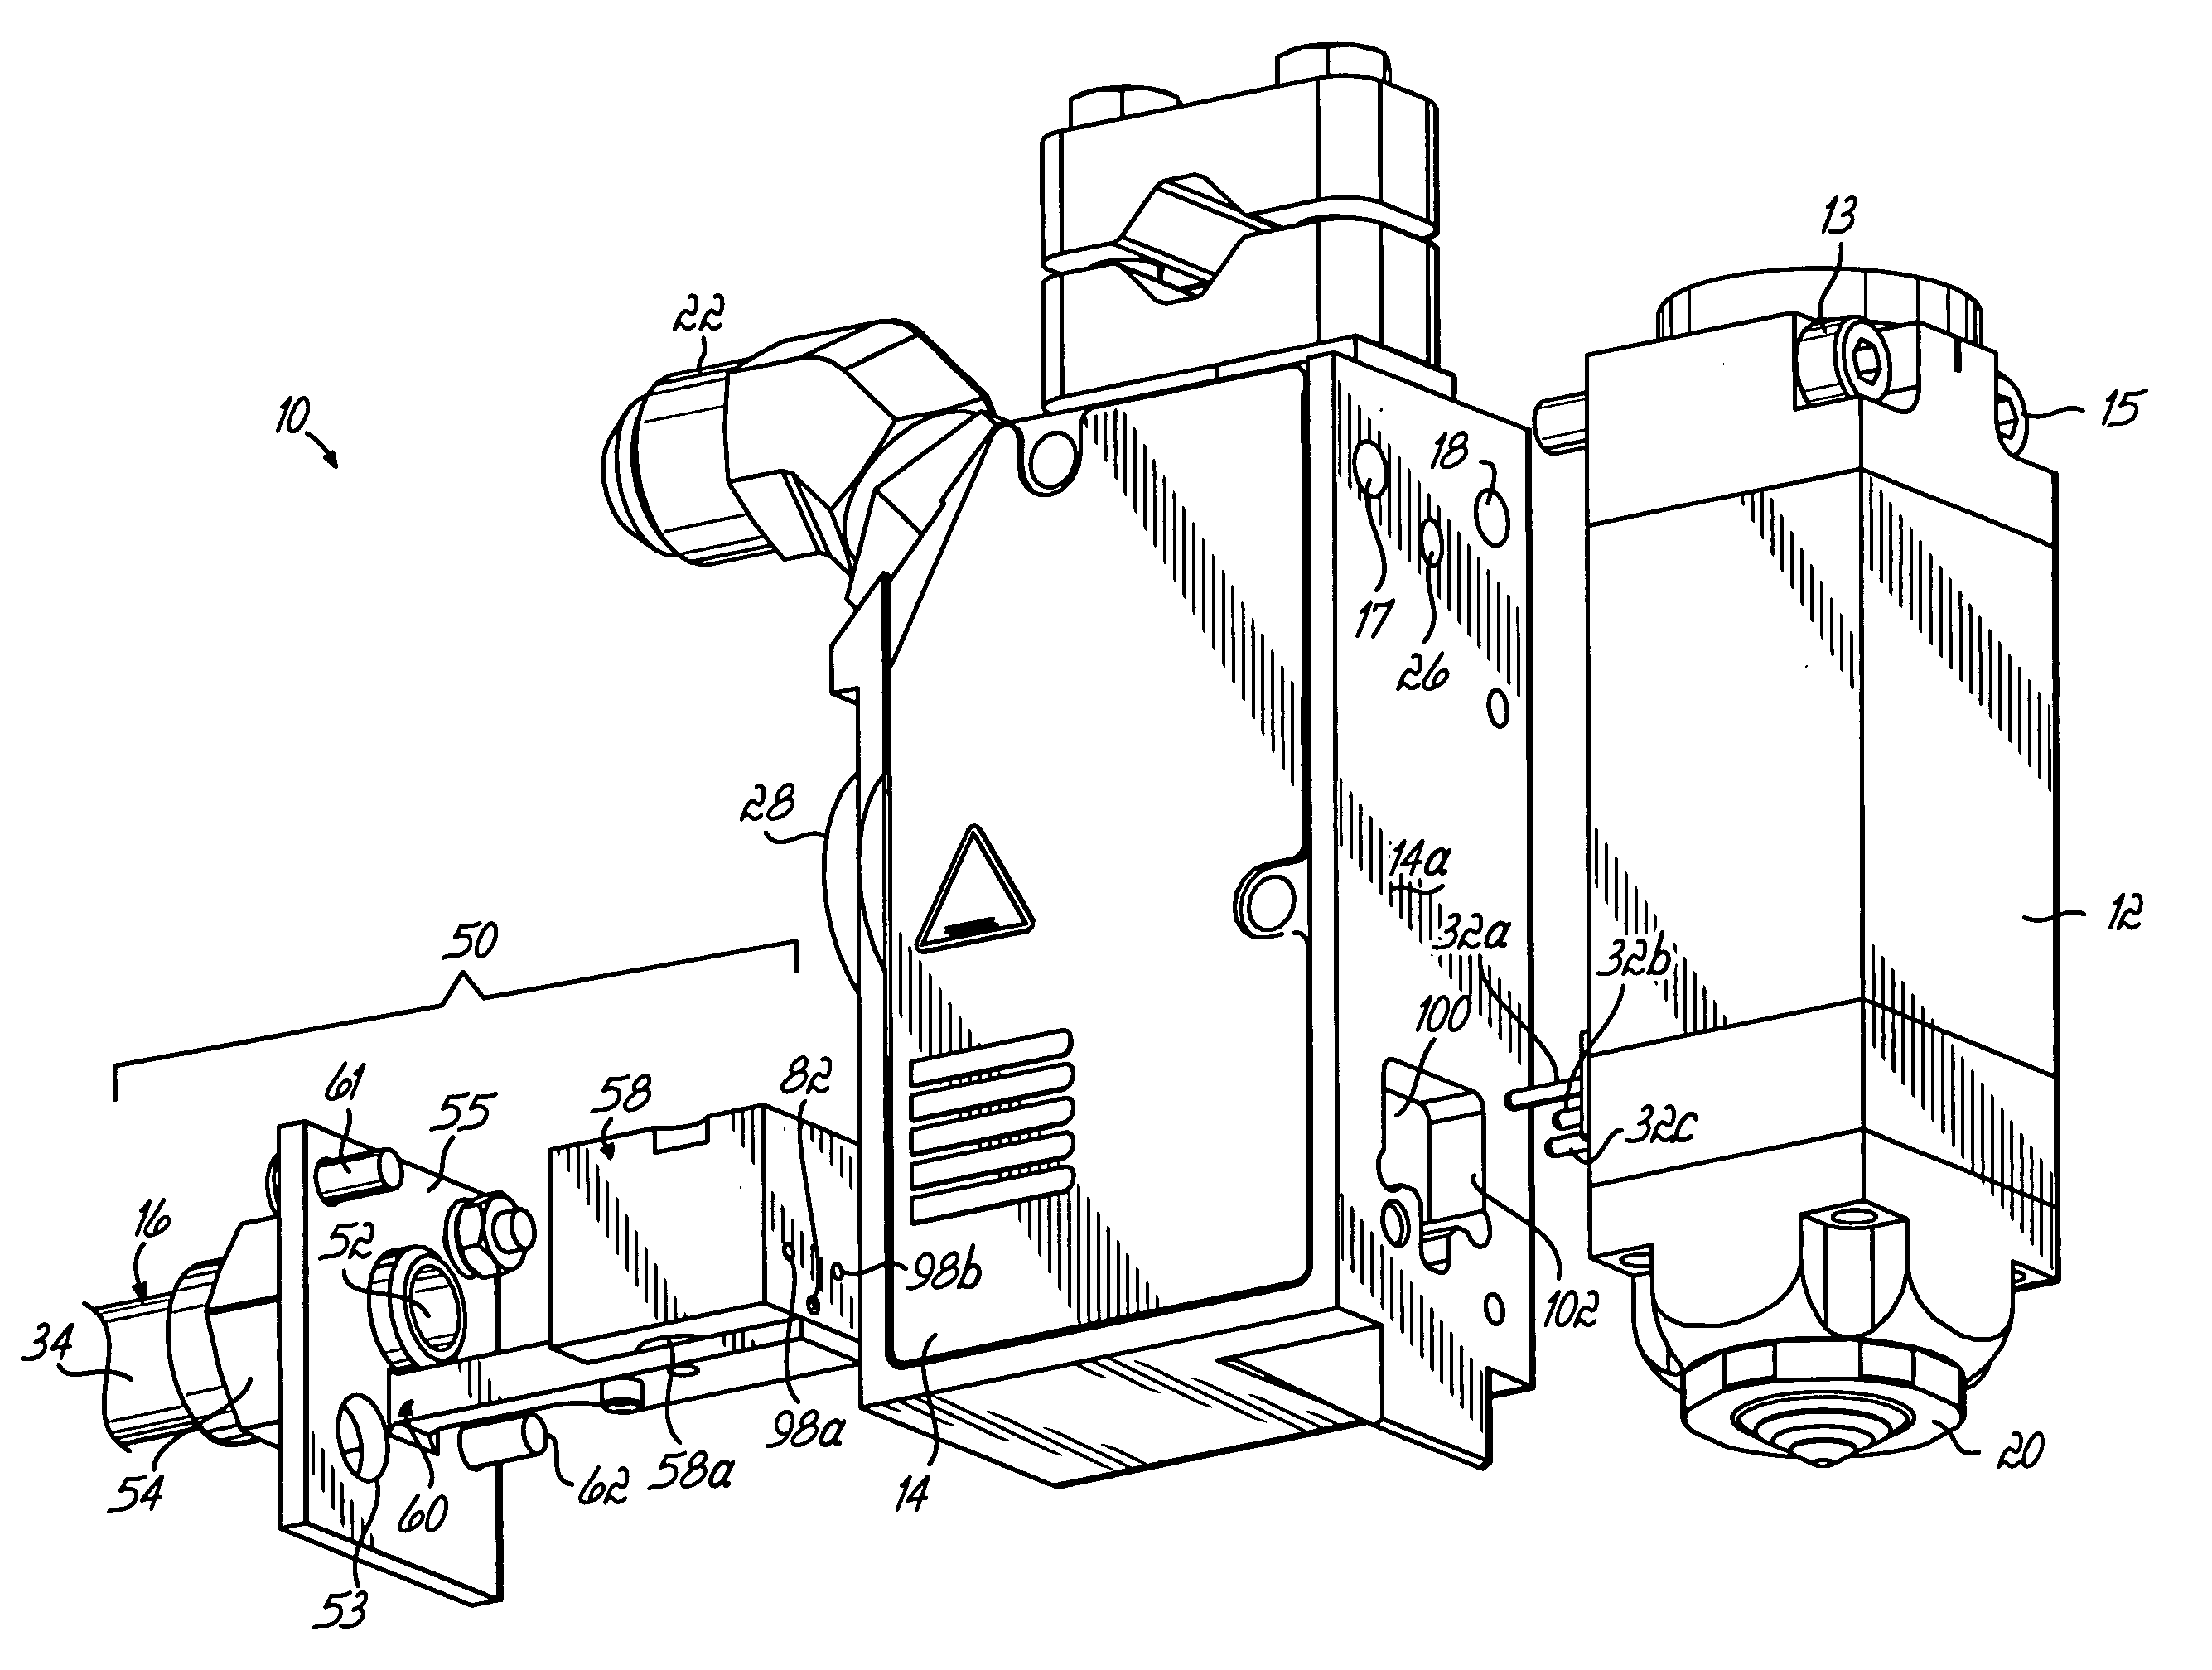 Liquid dispensing system having a modular cord set